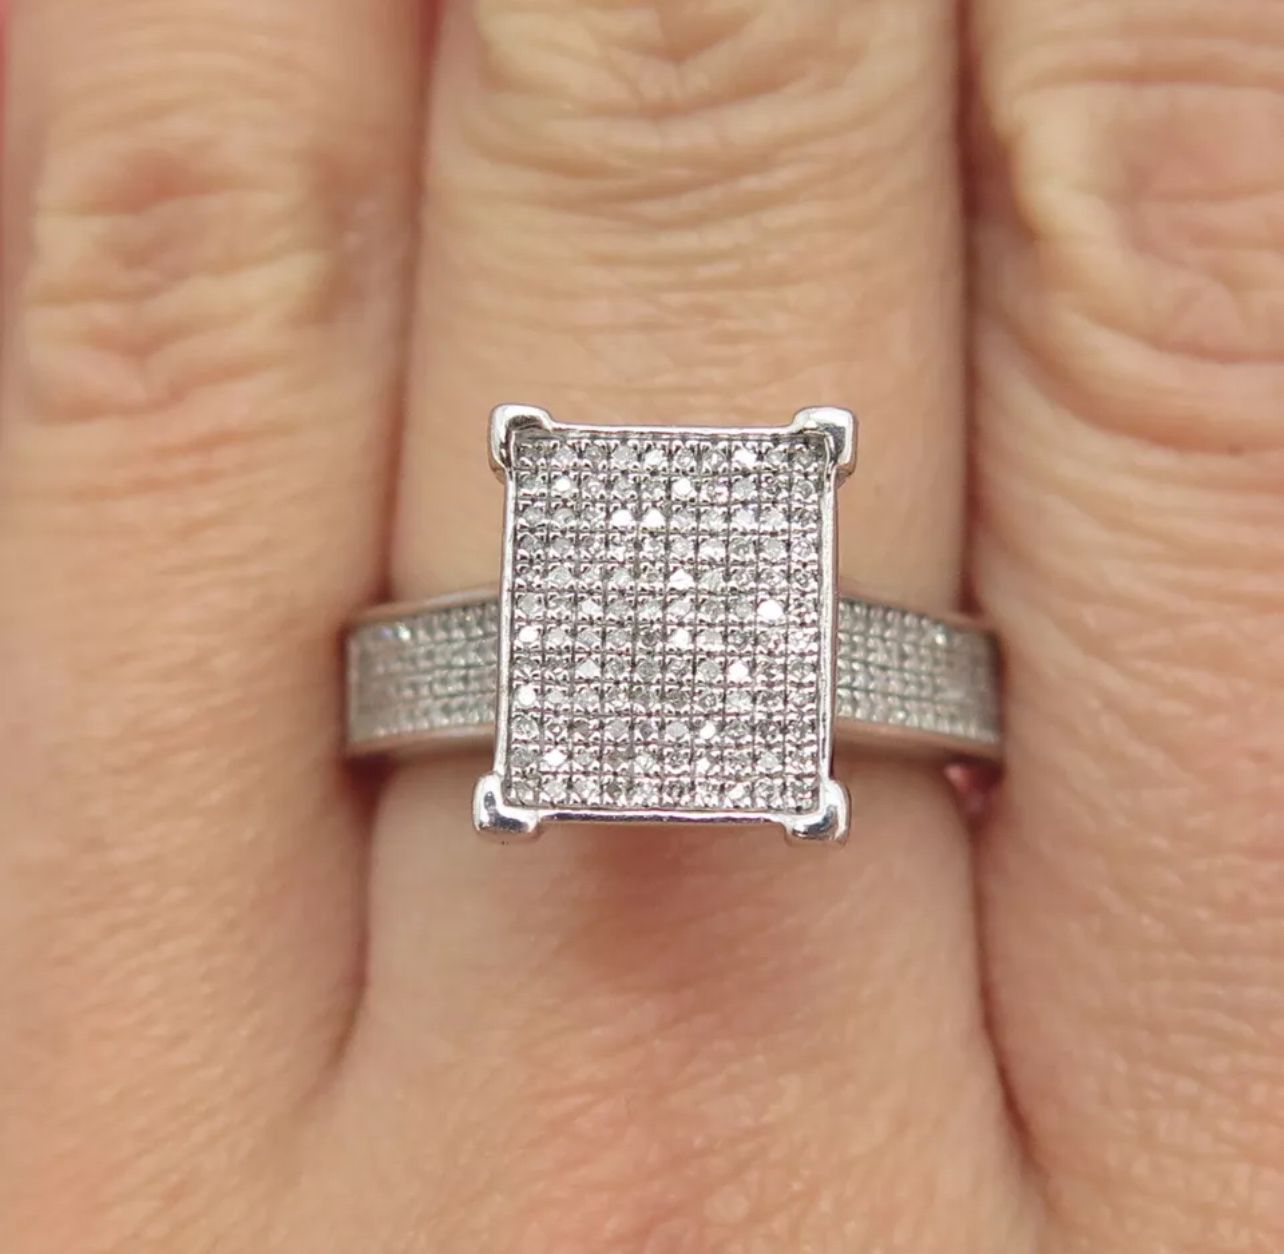 Engagement Diamond Ring For Women Size 7 